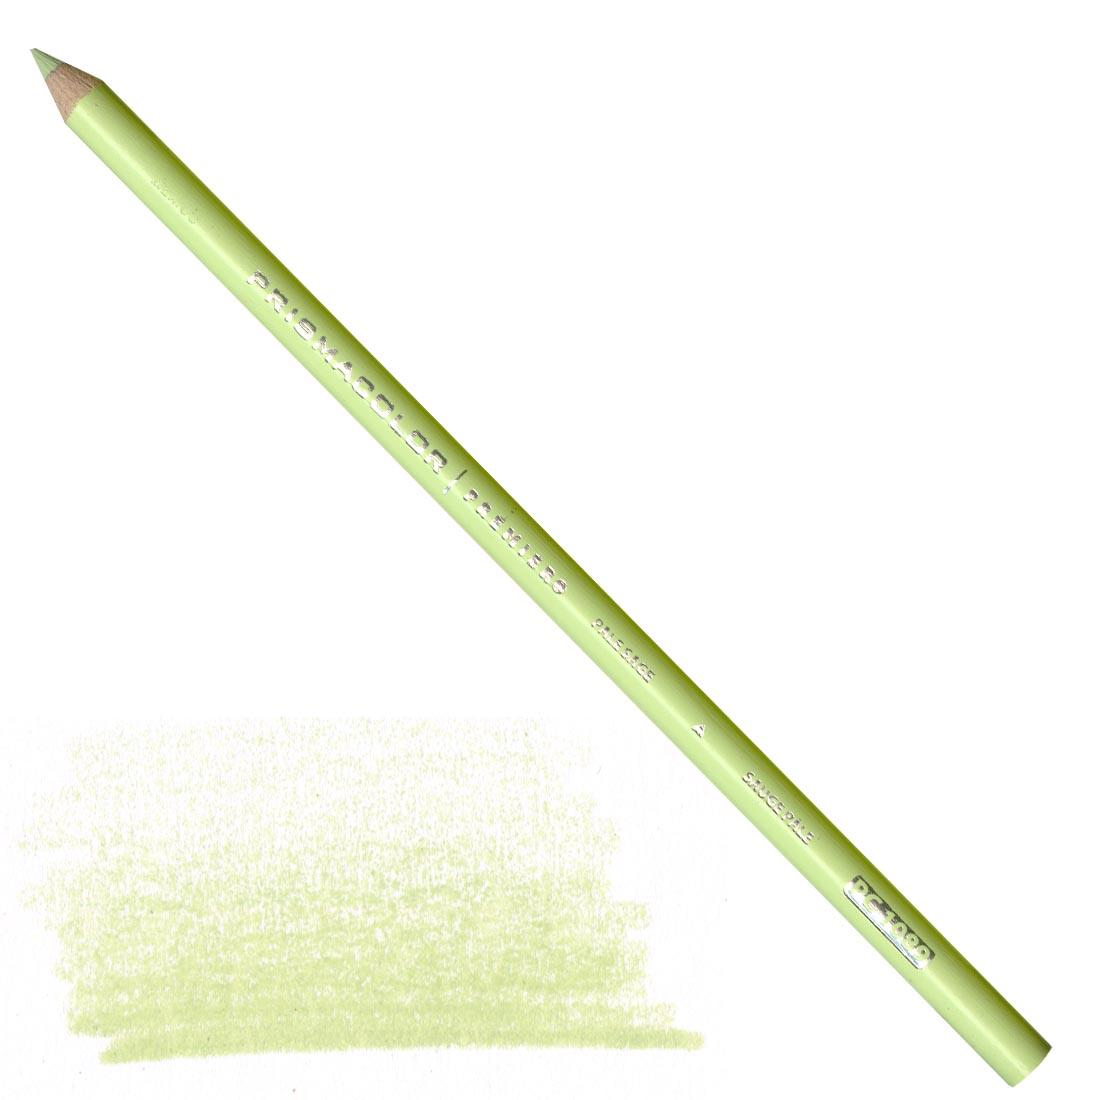 Pale Sage Prismacolor Premier Colored Pencil with a sample colored swatch